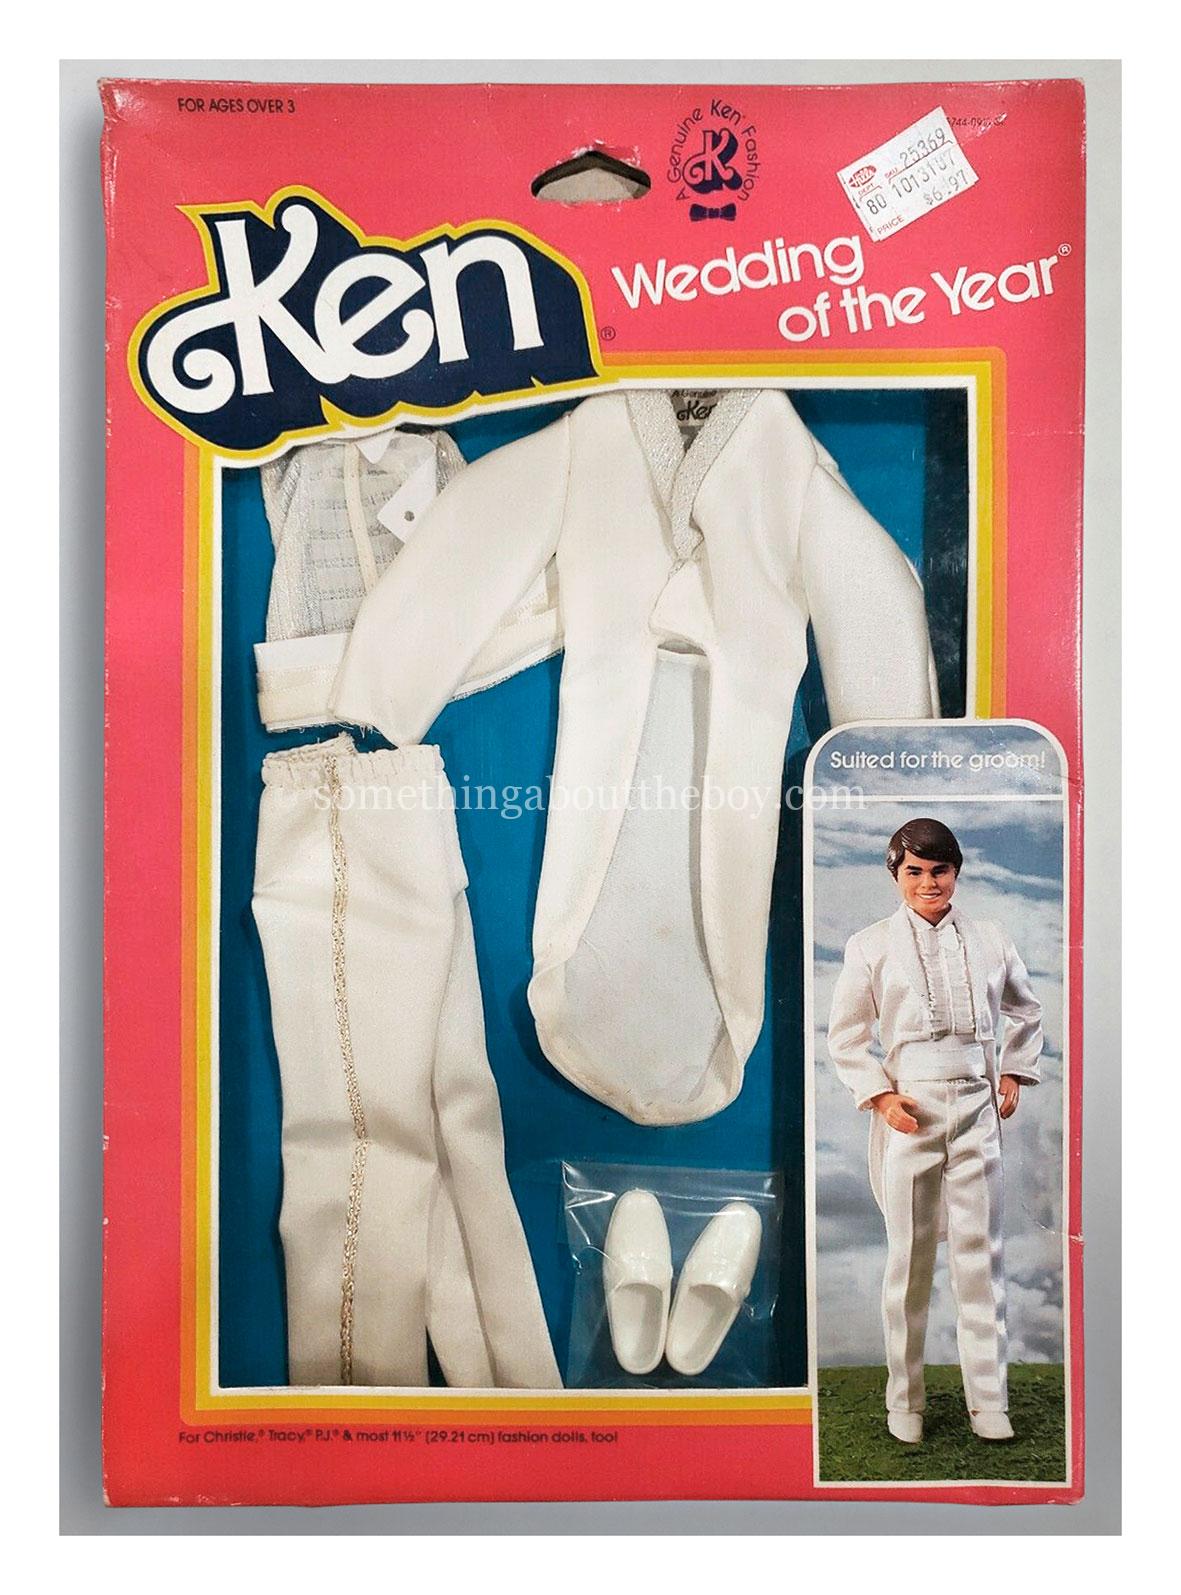 1984 Wedding of the Year #5744 in original packaging